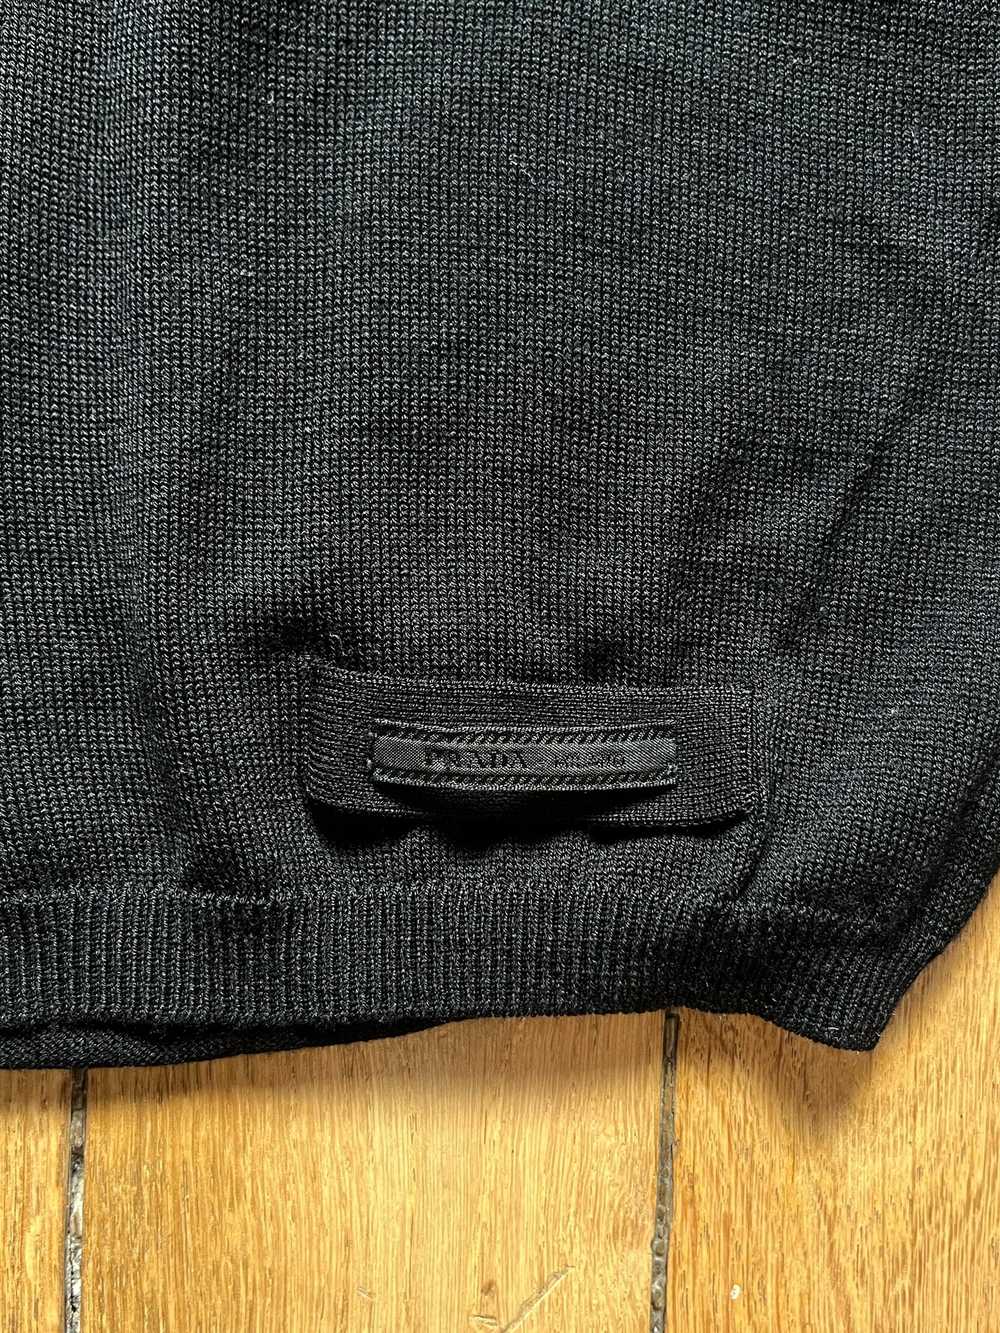 Prada Prada mens black wool knit v neck sweater - image 4